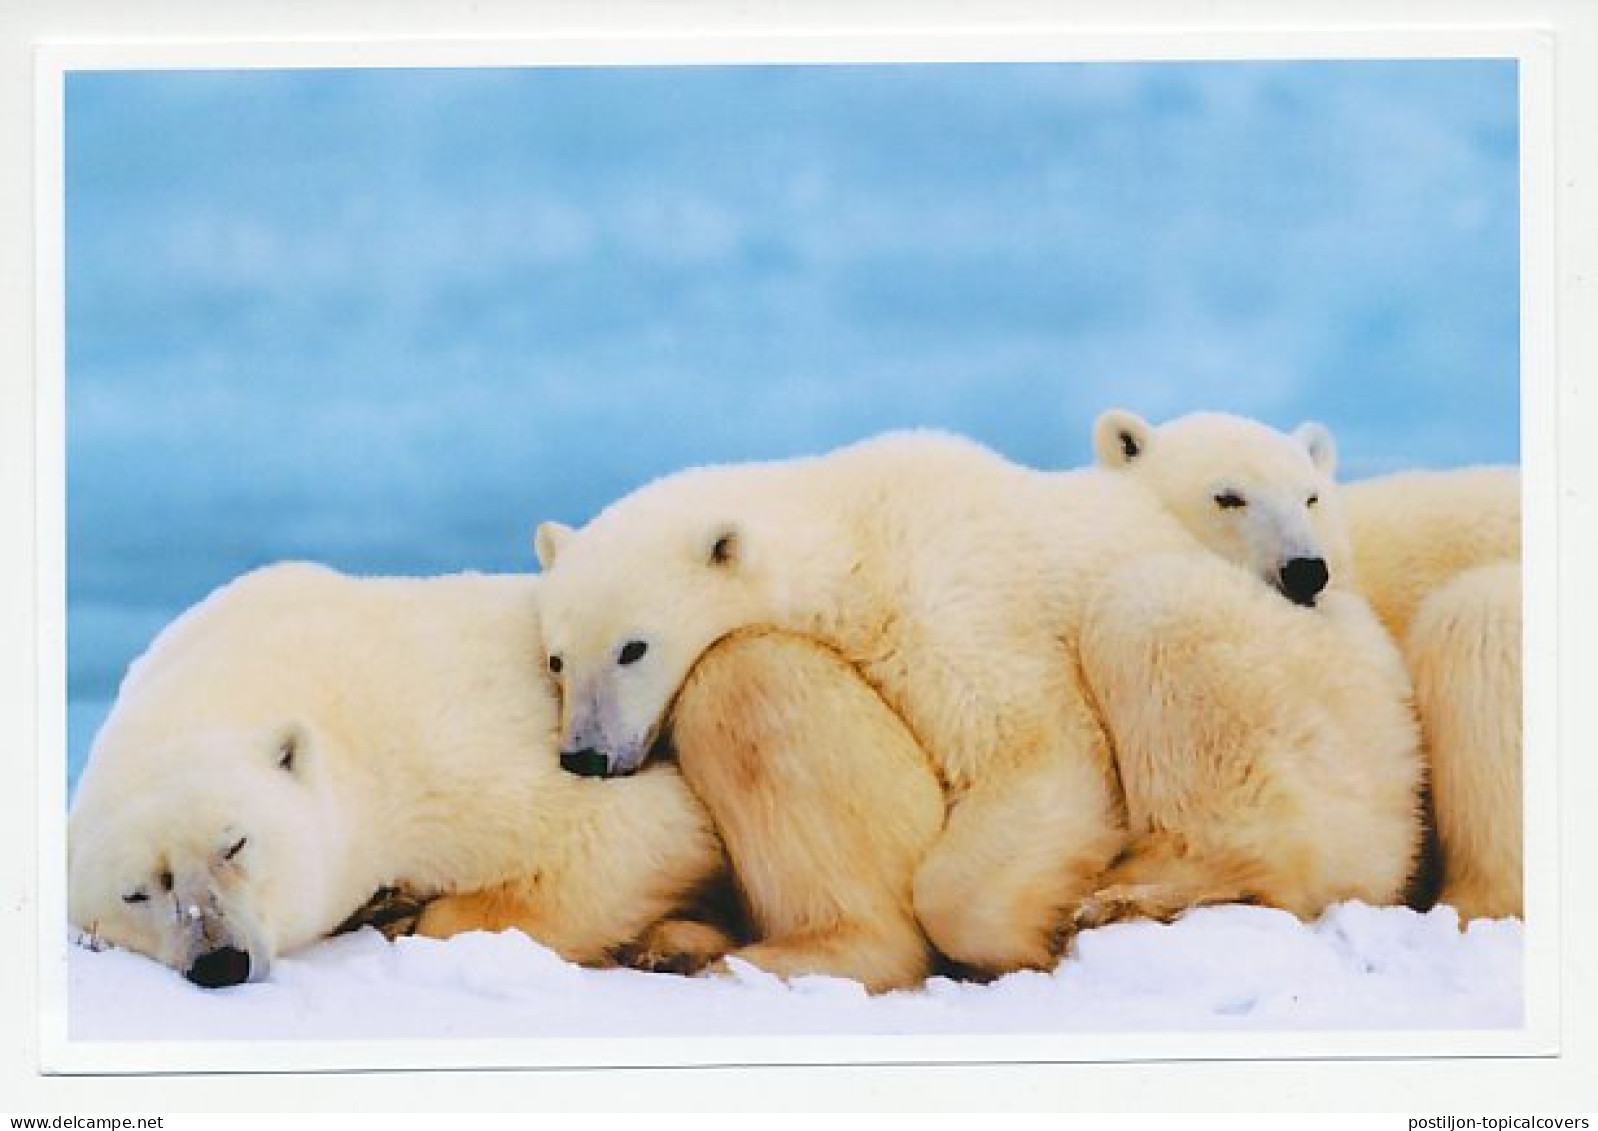 Postal Stationery China 2006 Polar Bear - Arktis Expeditionen